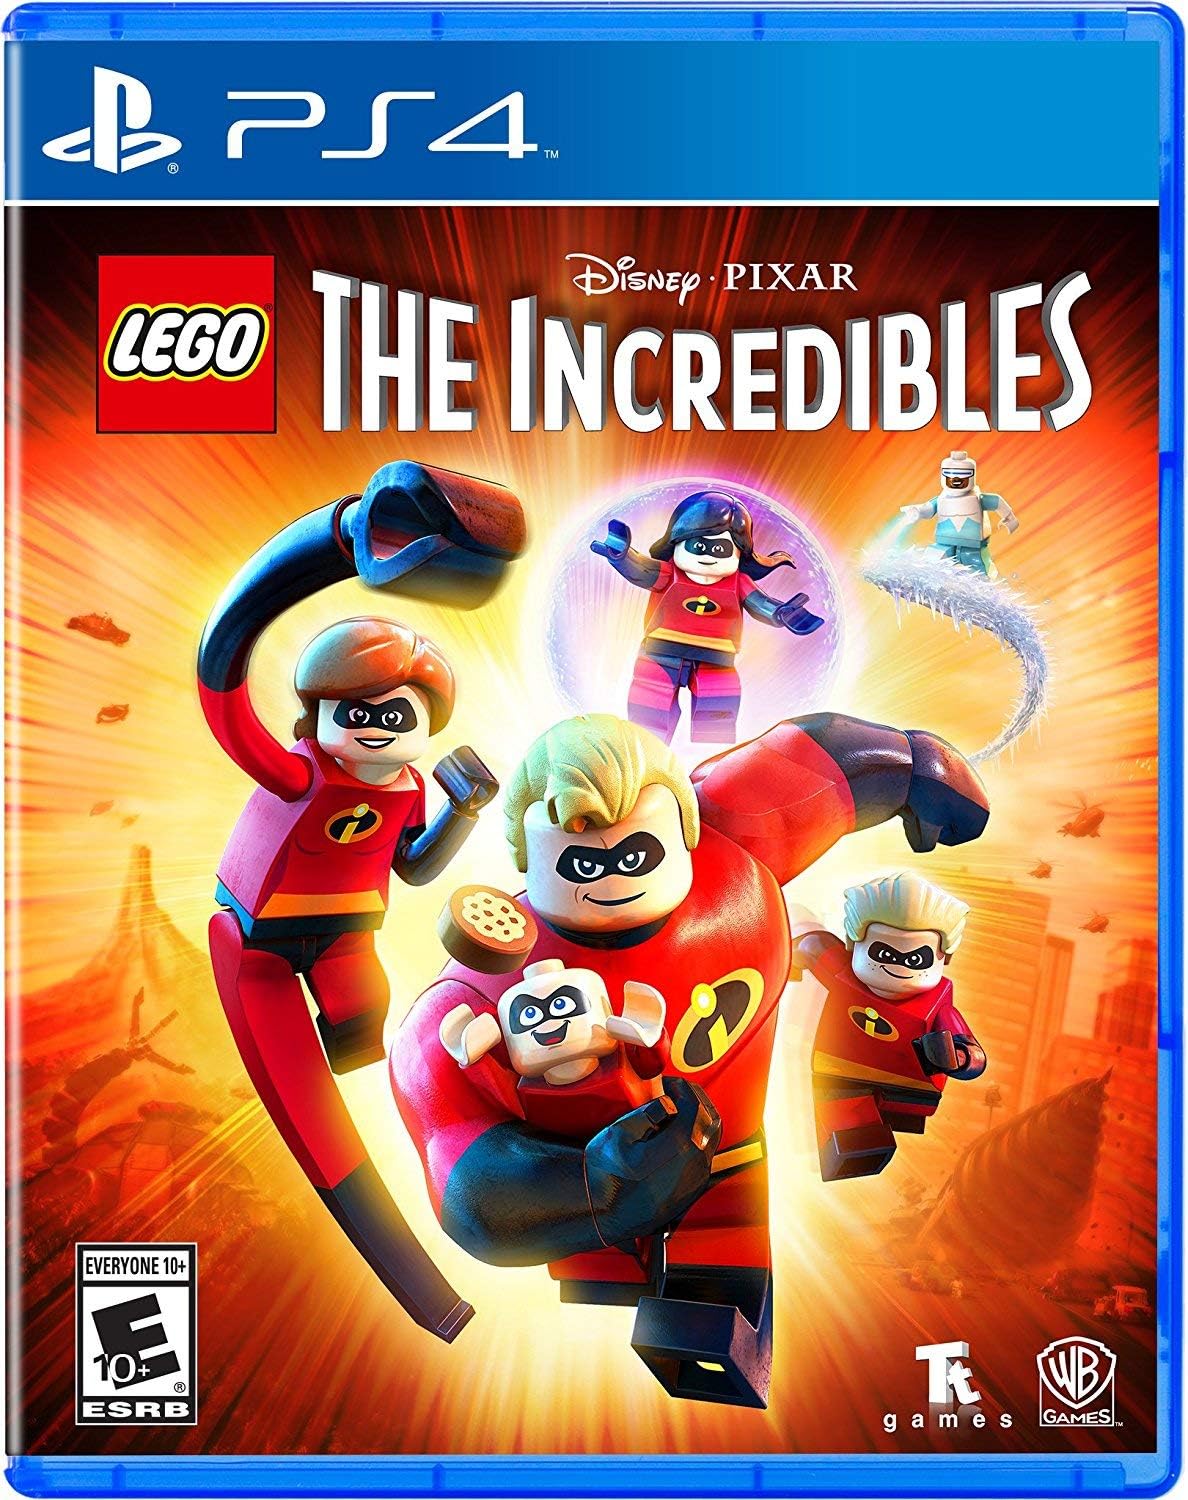 LEGO Disney Pixar’s The Incredibles – PS4